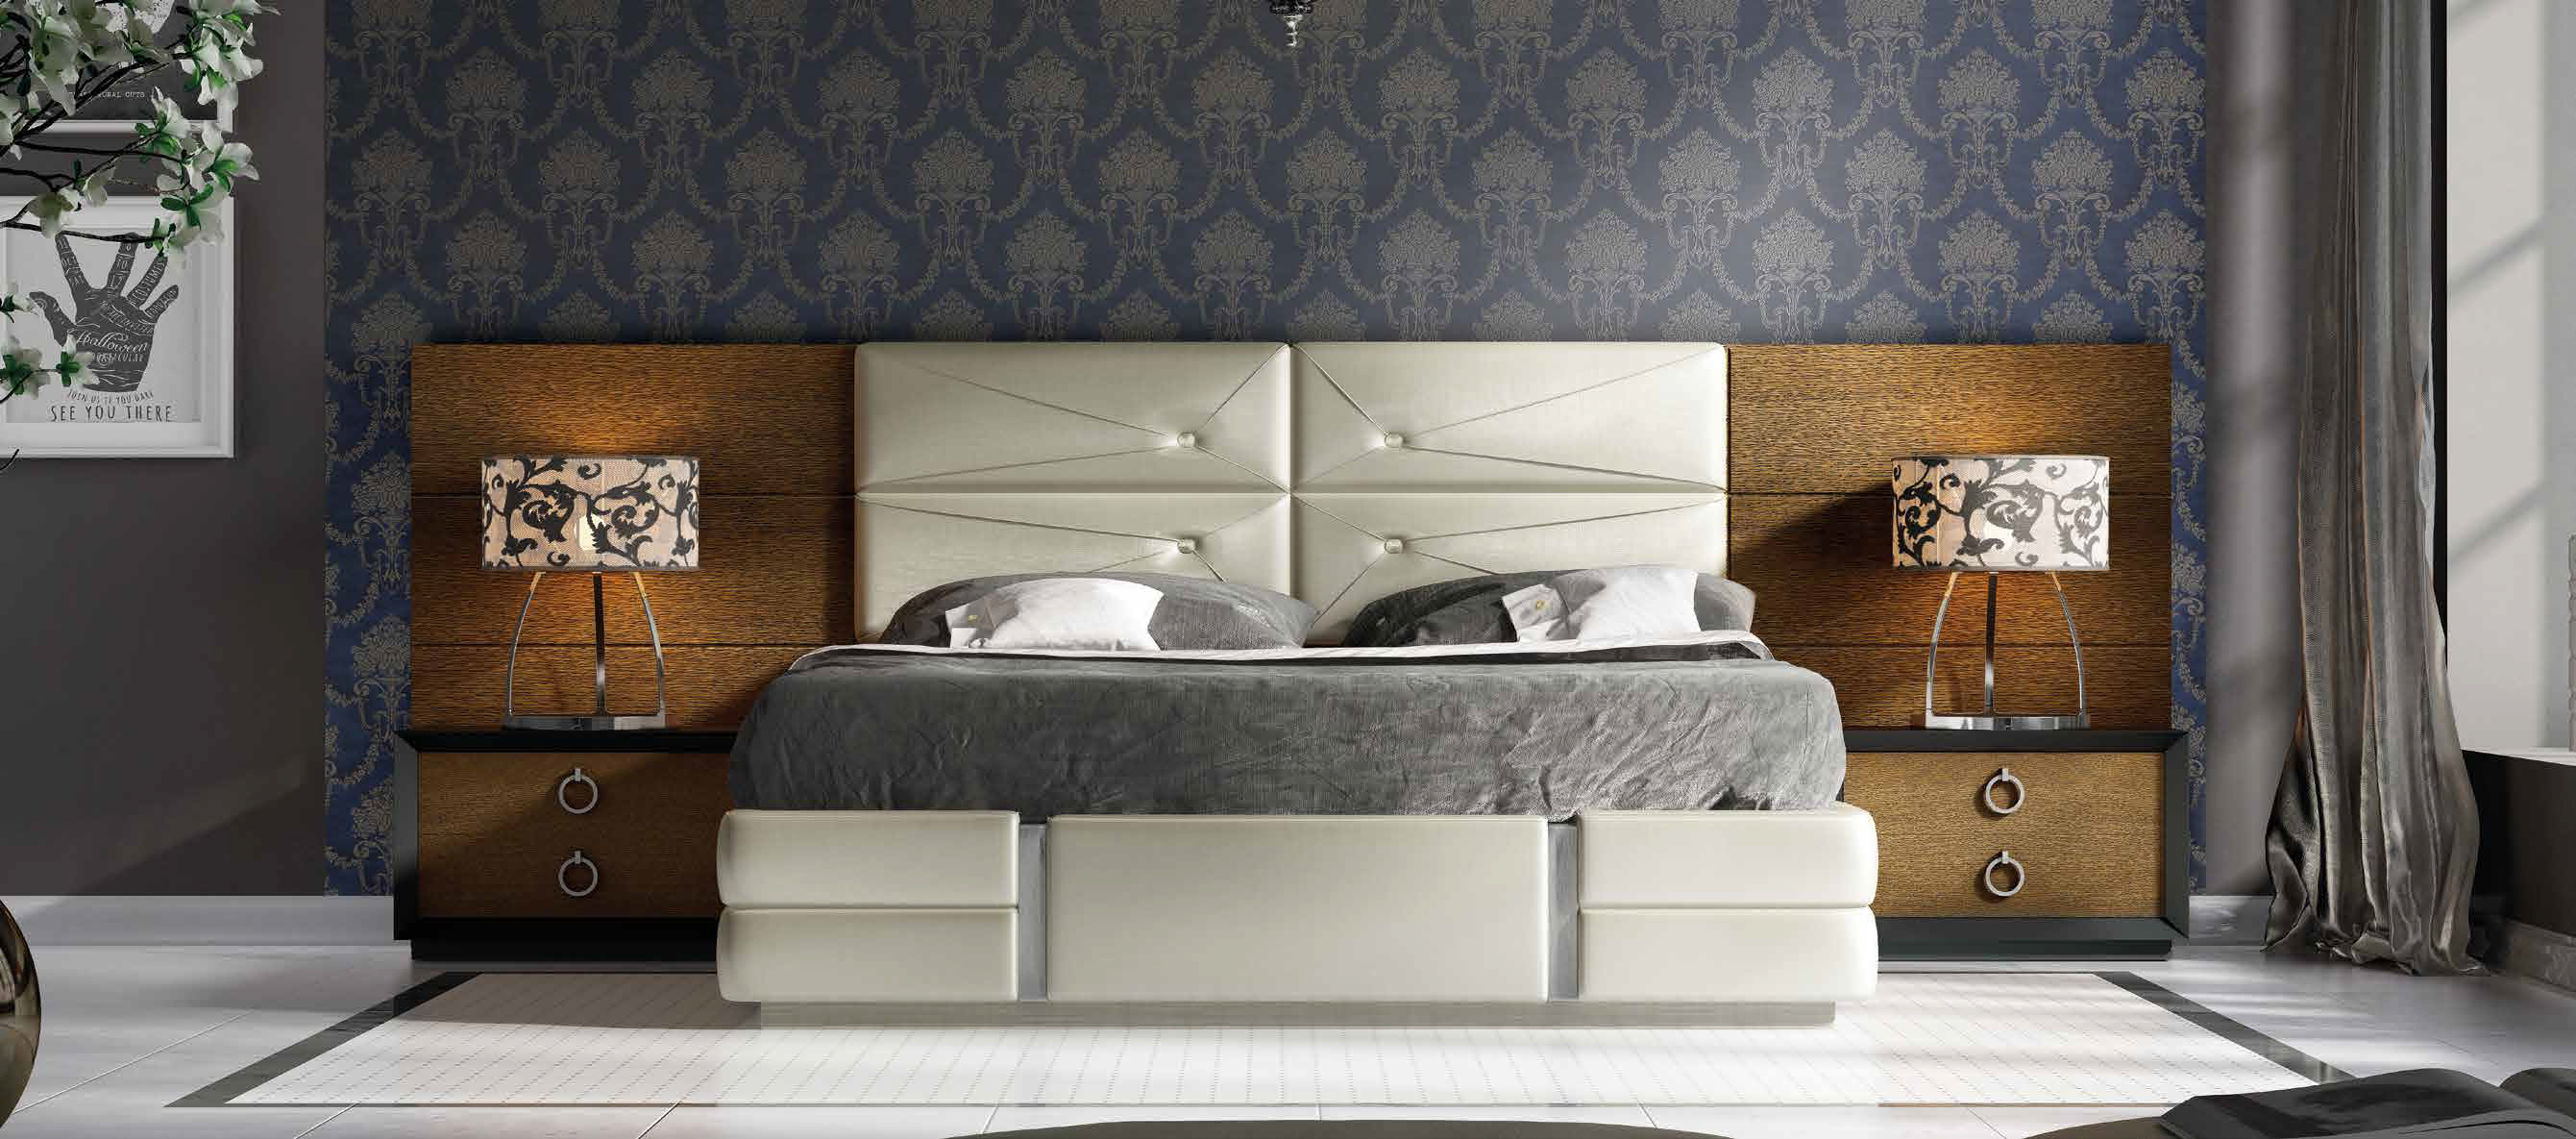 Brands Franco Furniture Bedrooms vol3, Spain DOR 66